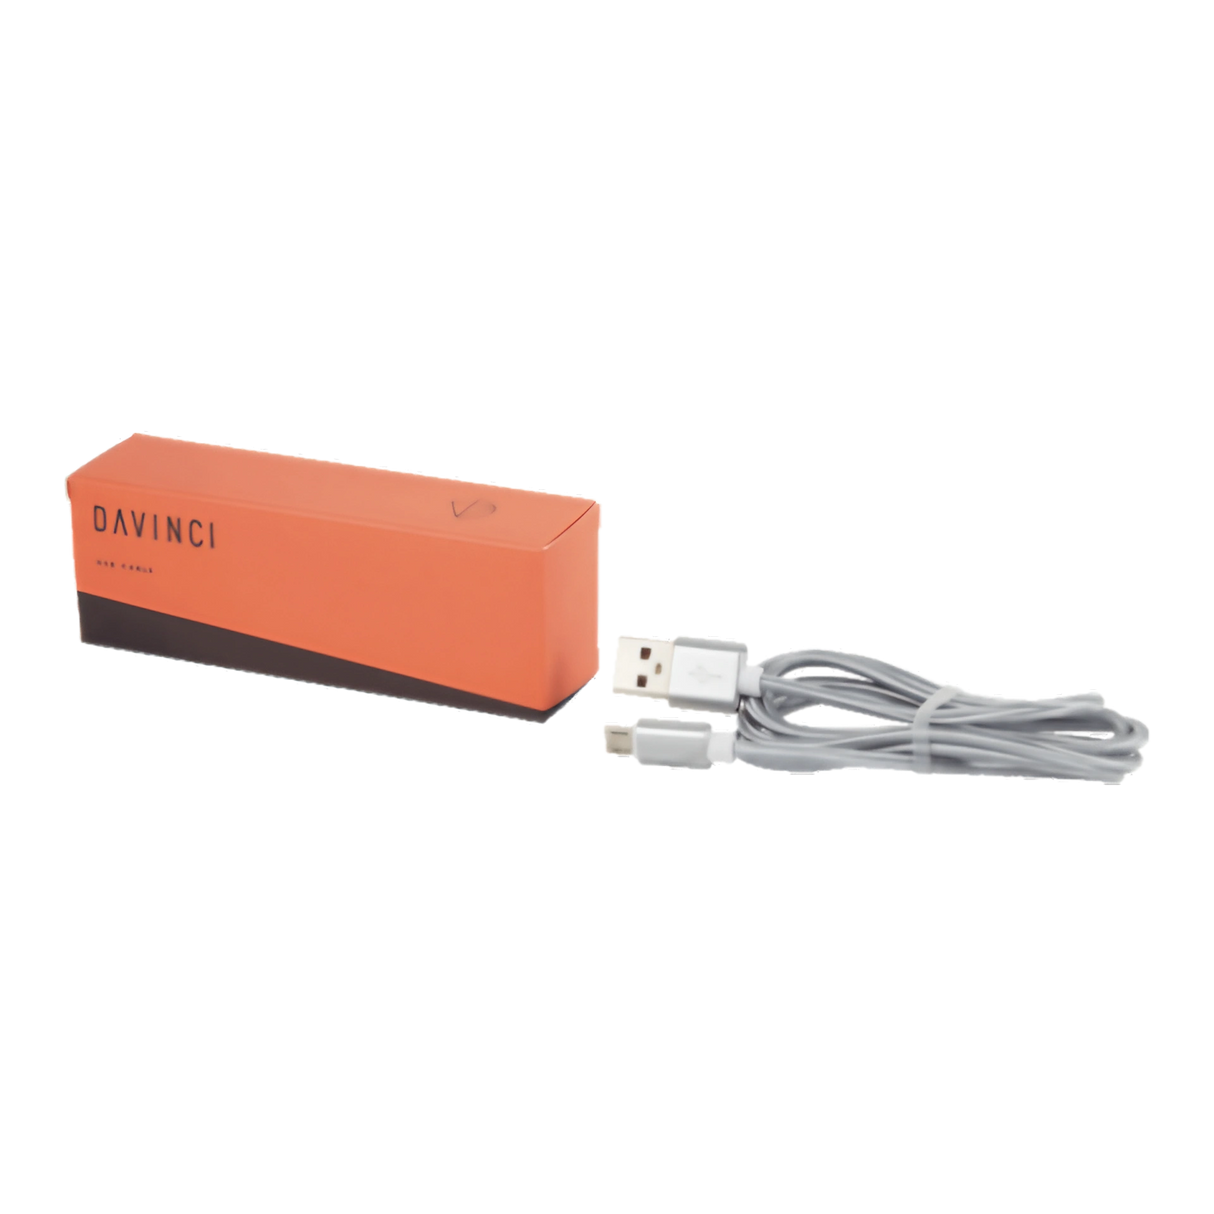 DaVinci MIQRO Vaporizer Zirconium Path with USB Cable and Orange Box